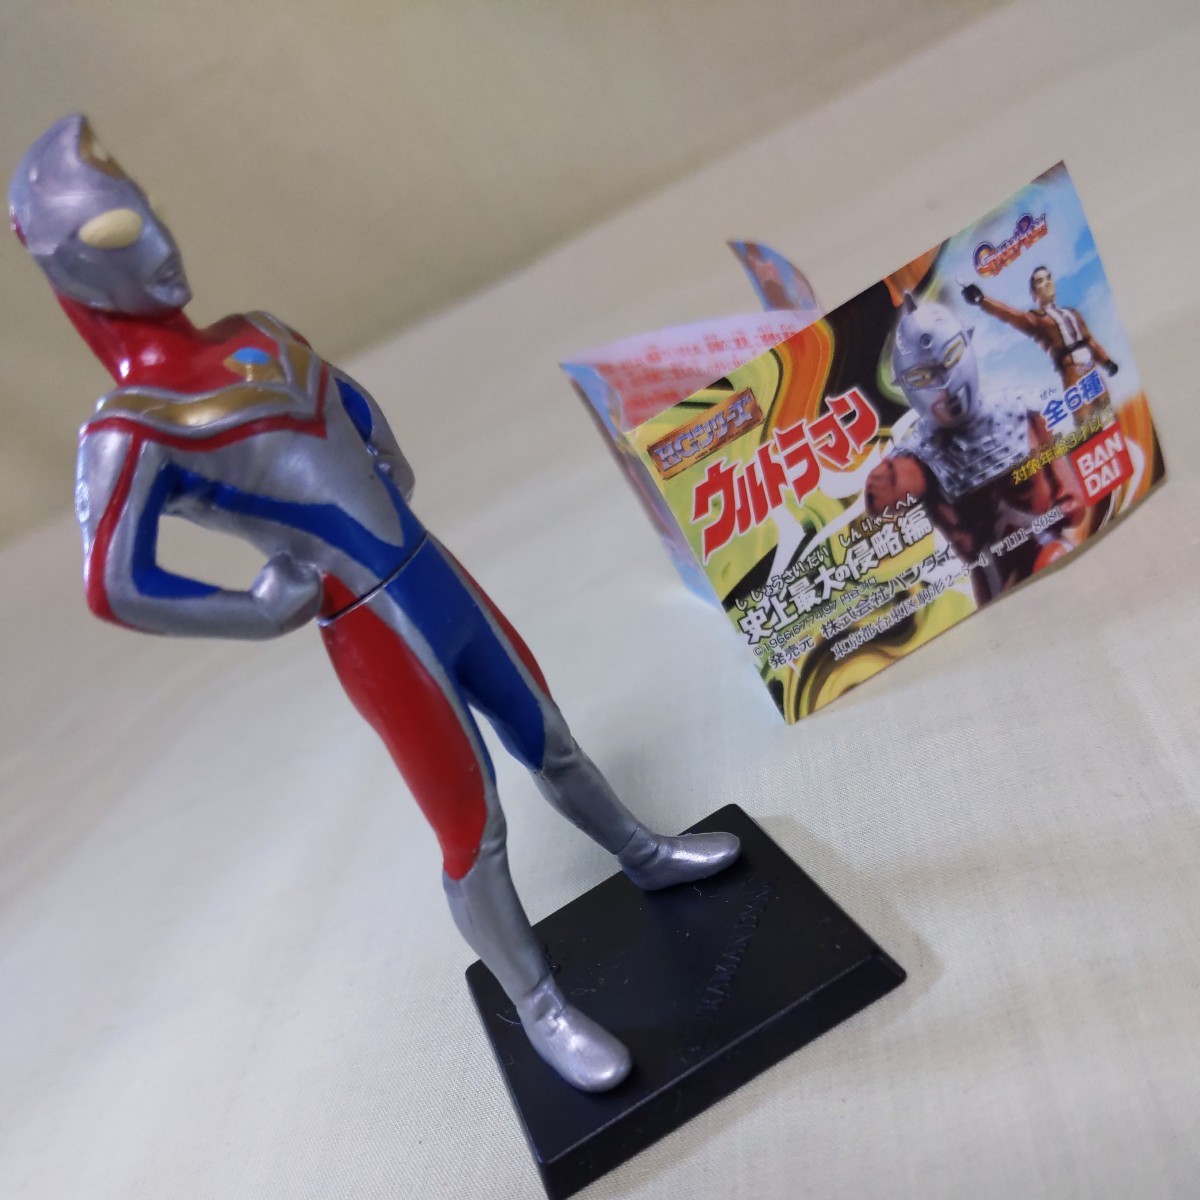  Ultraman Dyna ( flash модель ) Capsule gashapon Gacha Gacha фигурка HG серии исторический максимальный. Shinryaku сборник иен . Pro / Bandai 